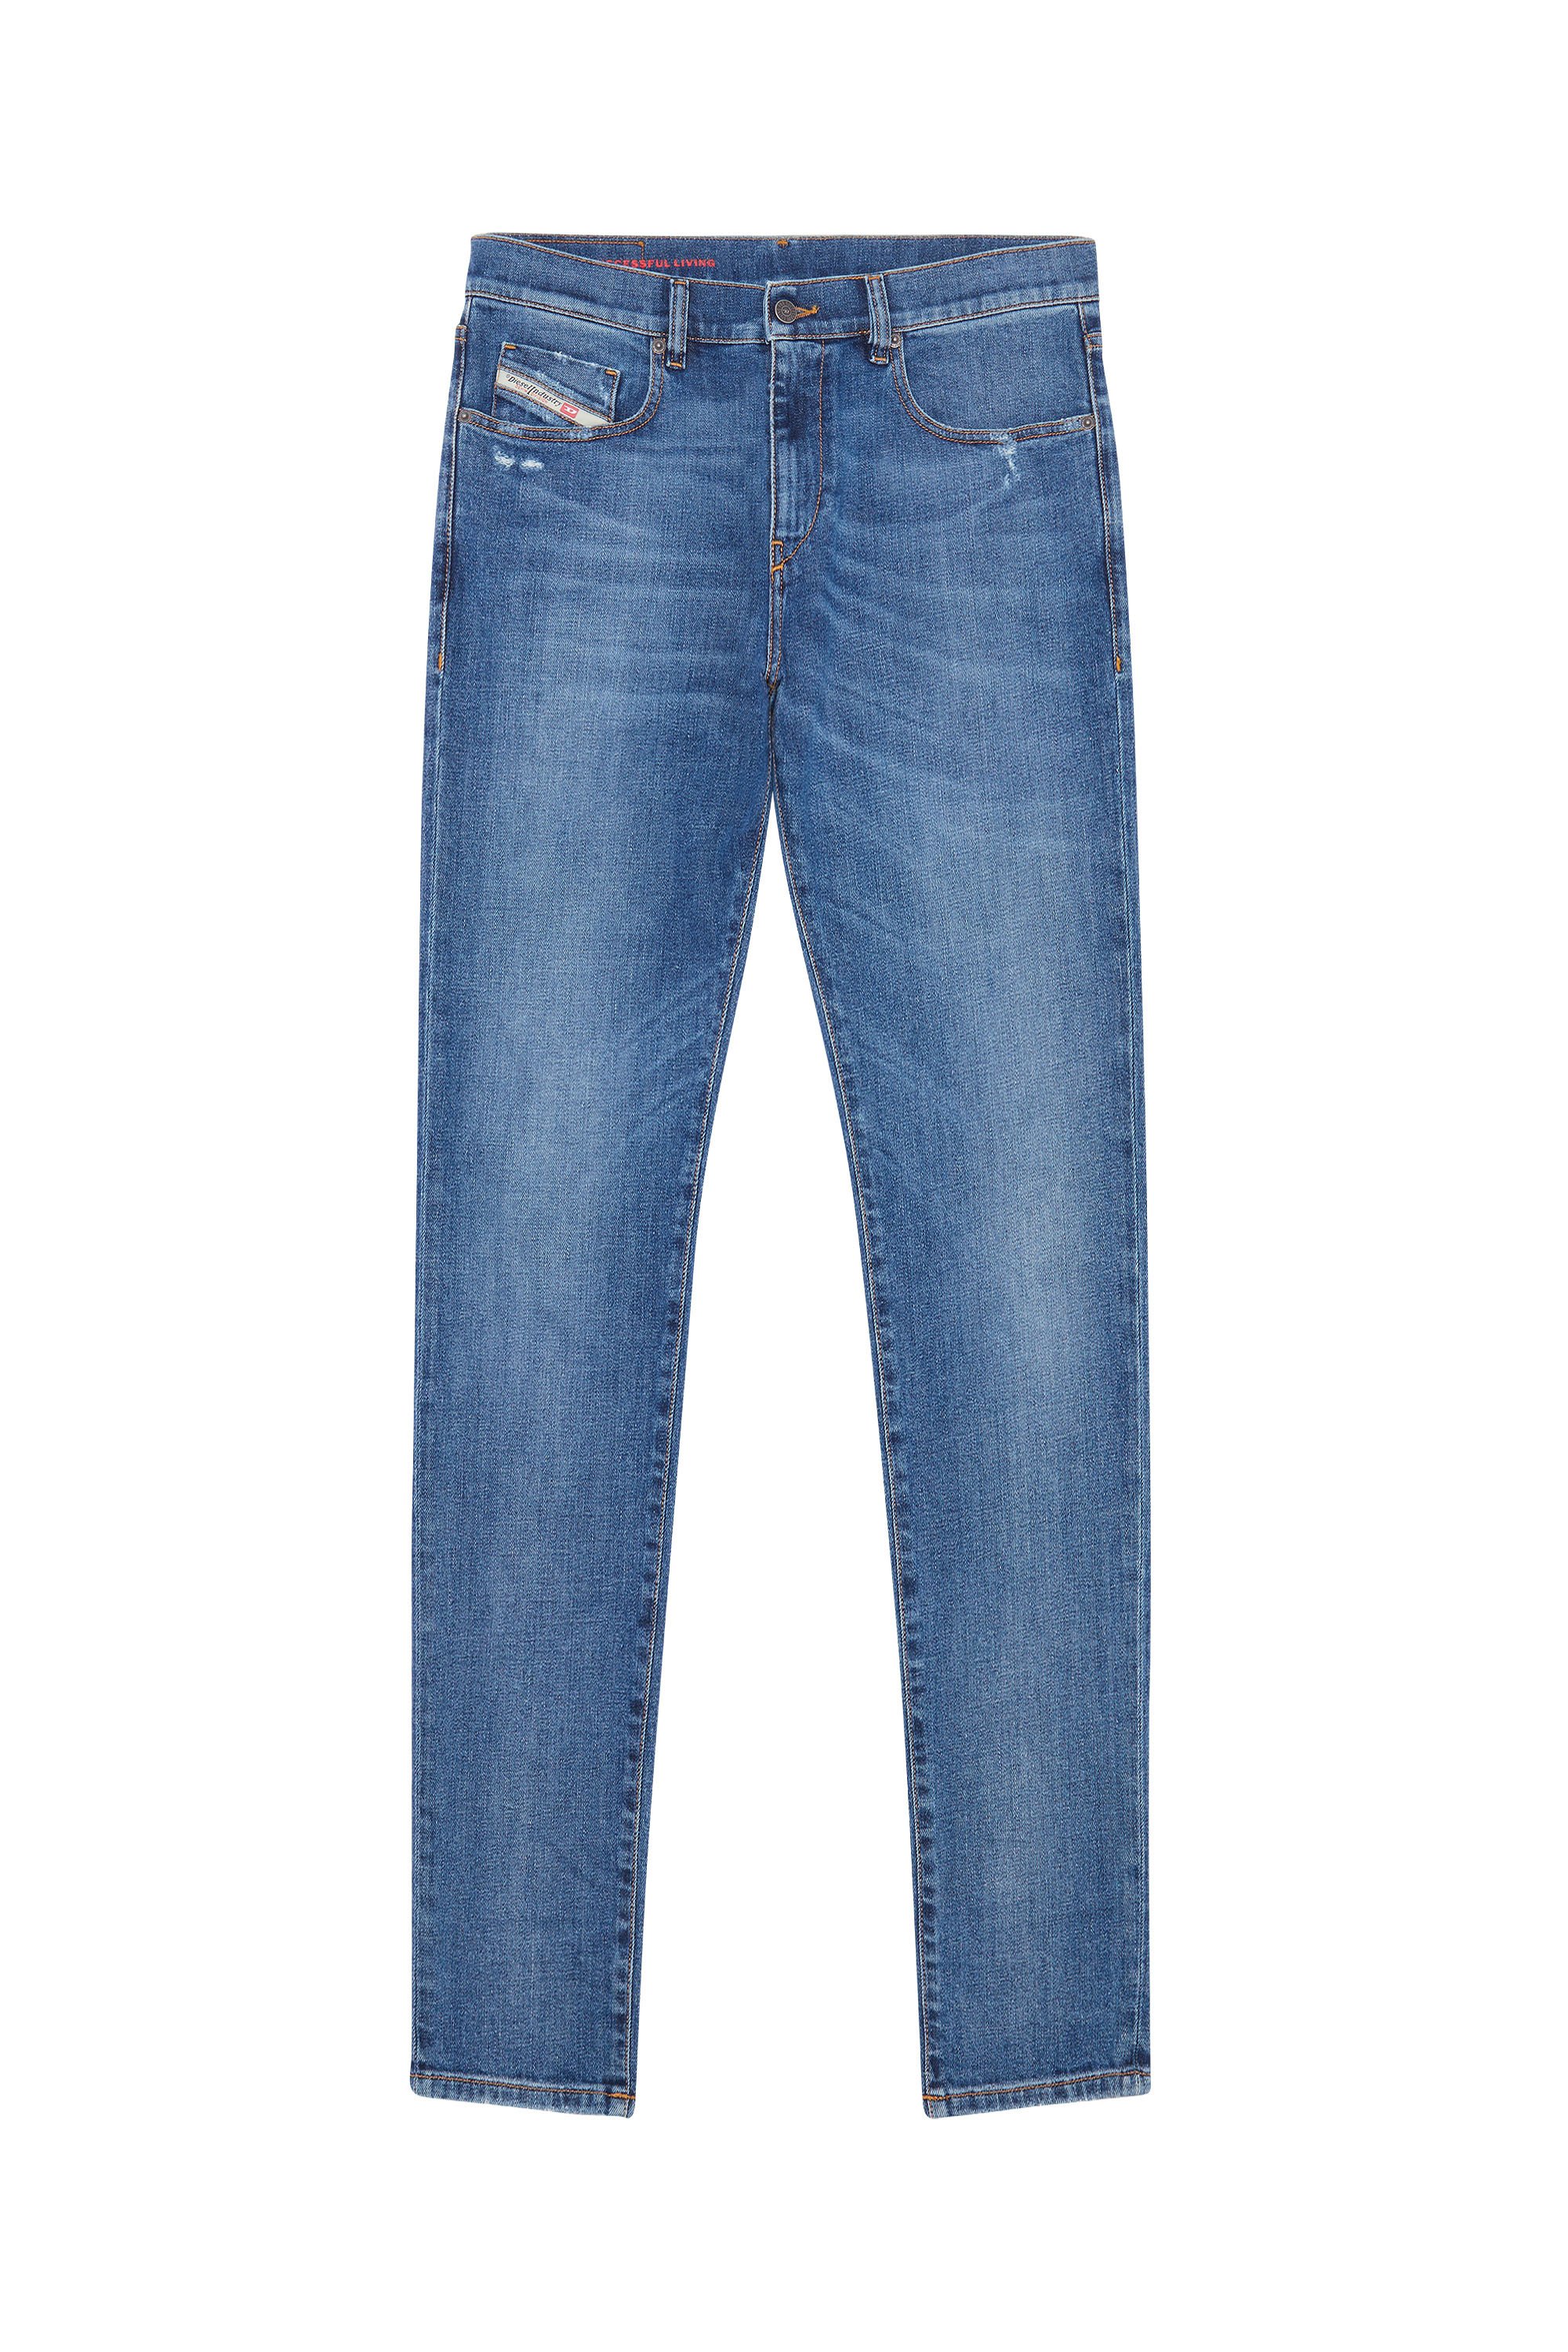 2019 D-STRUKT 09E44 Slim Jeans, Blu medio - Jeans